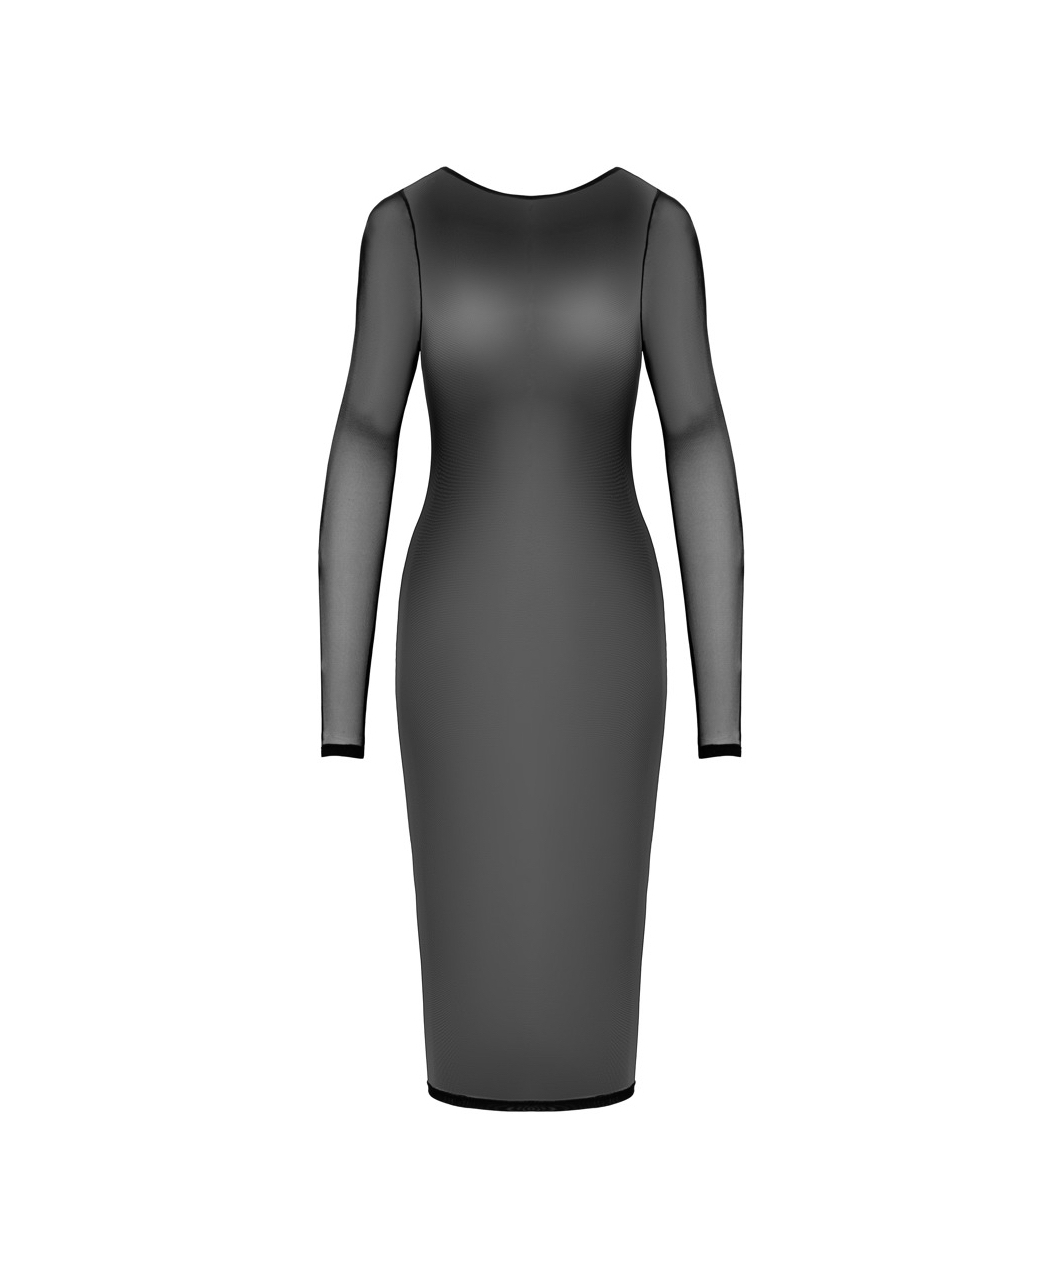 Cottelli Lingerie black sheer mesh dress with back zipper & chains